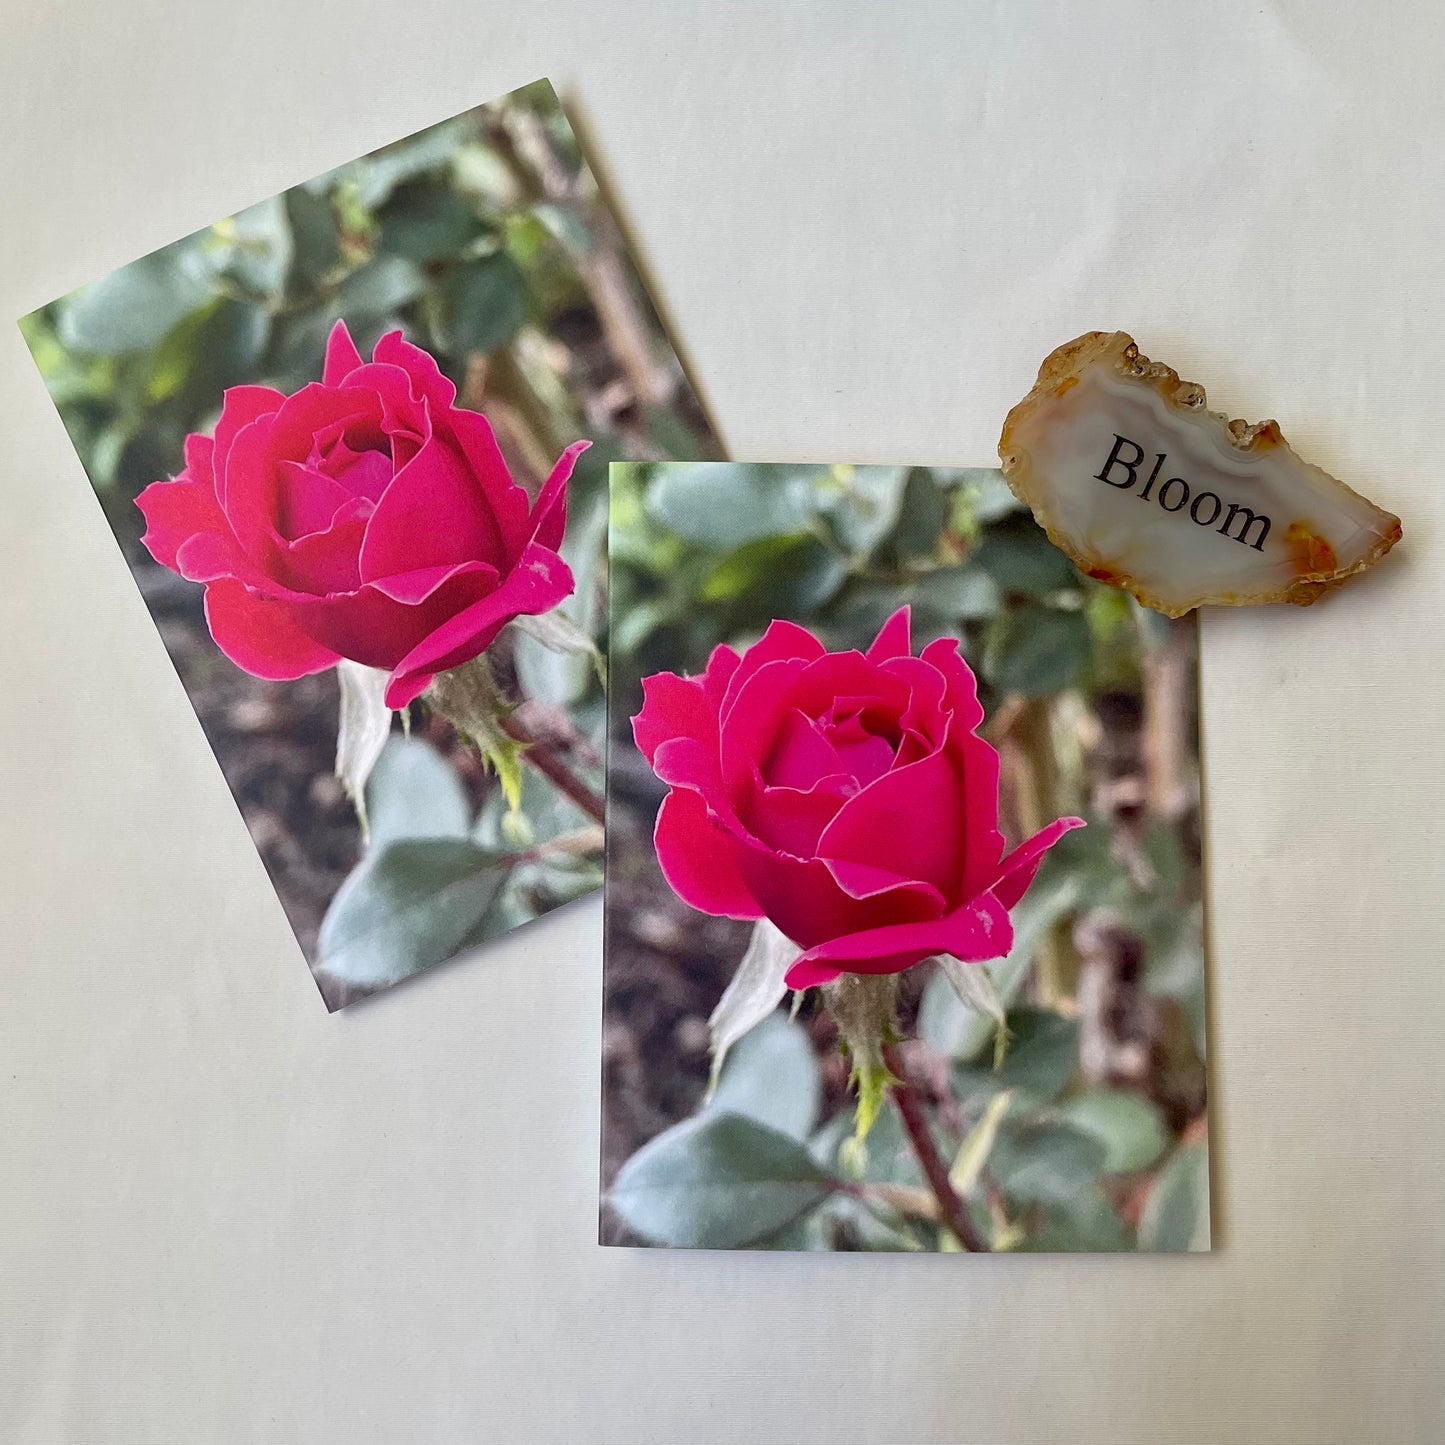 Mini Roses - Original Photography Greeting Card (s) with Kraft Envelope(s)